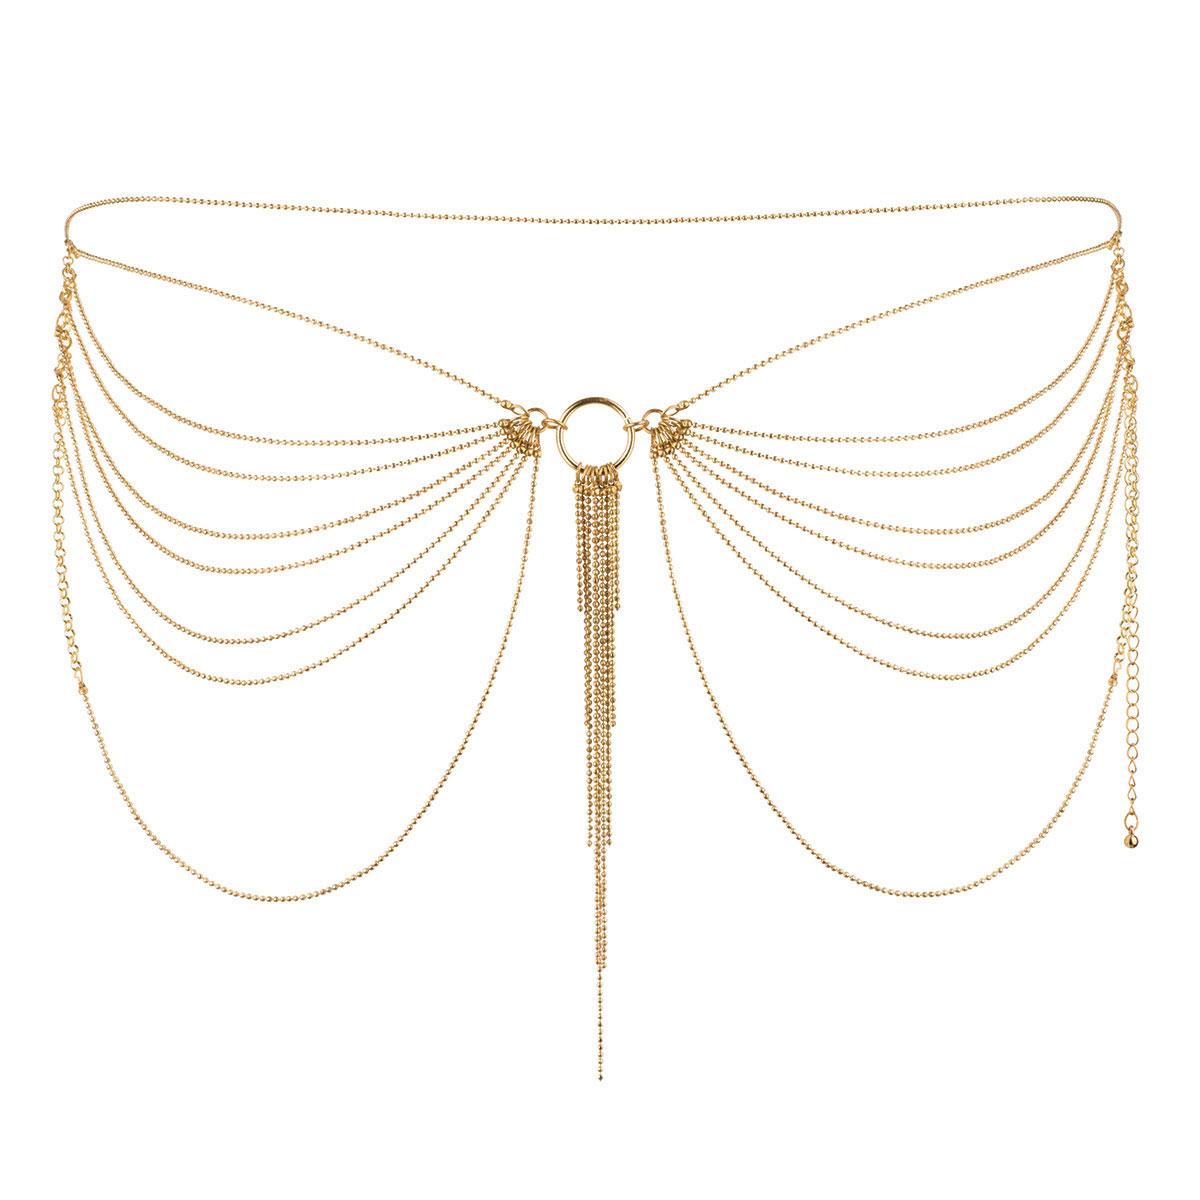 Bijoux Indiscrets Magnifique Collection Chain Waist Jewelry - Gold